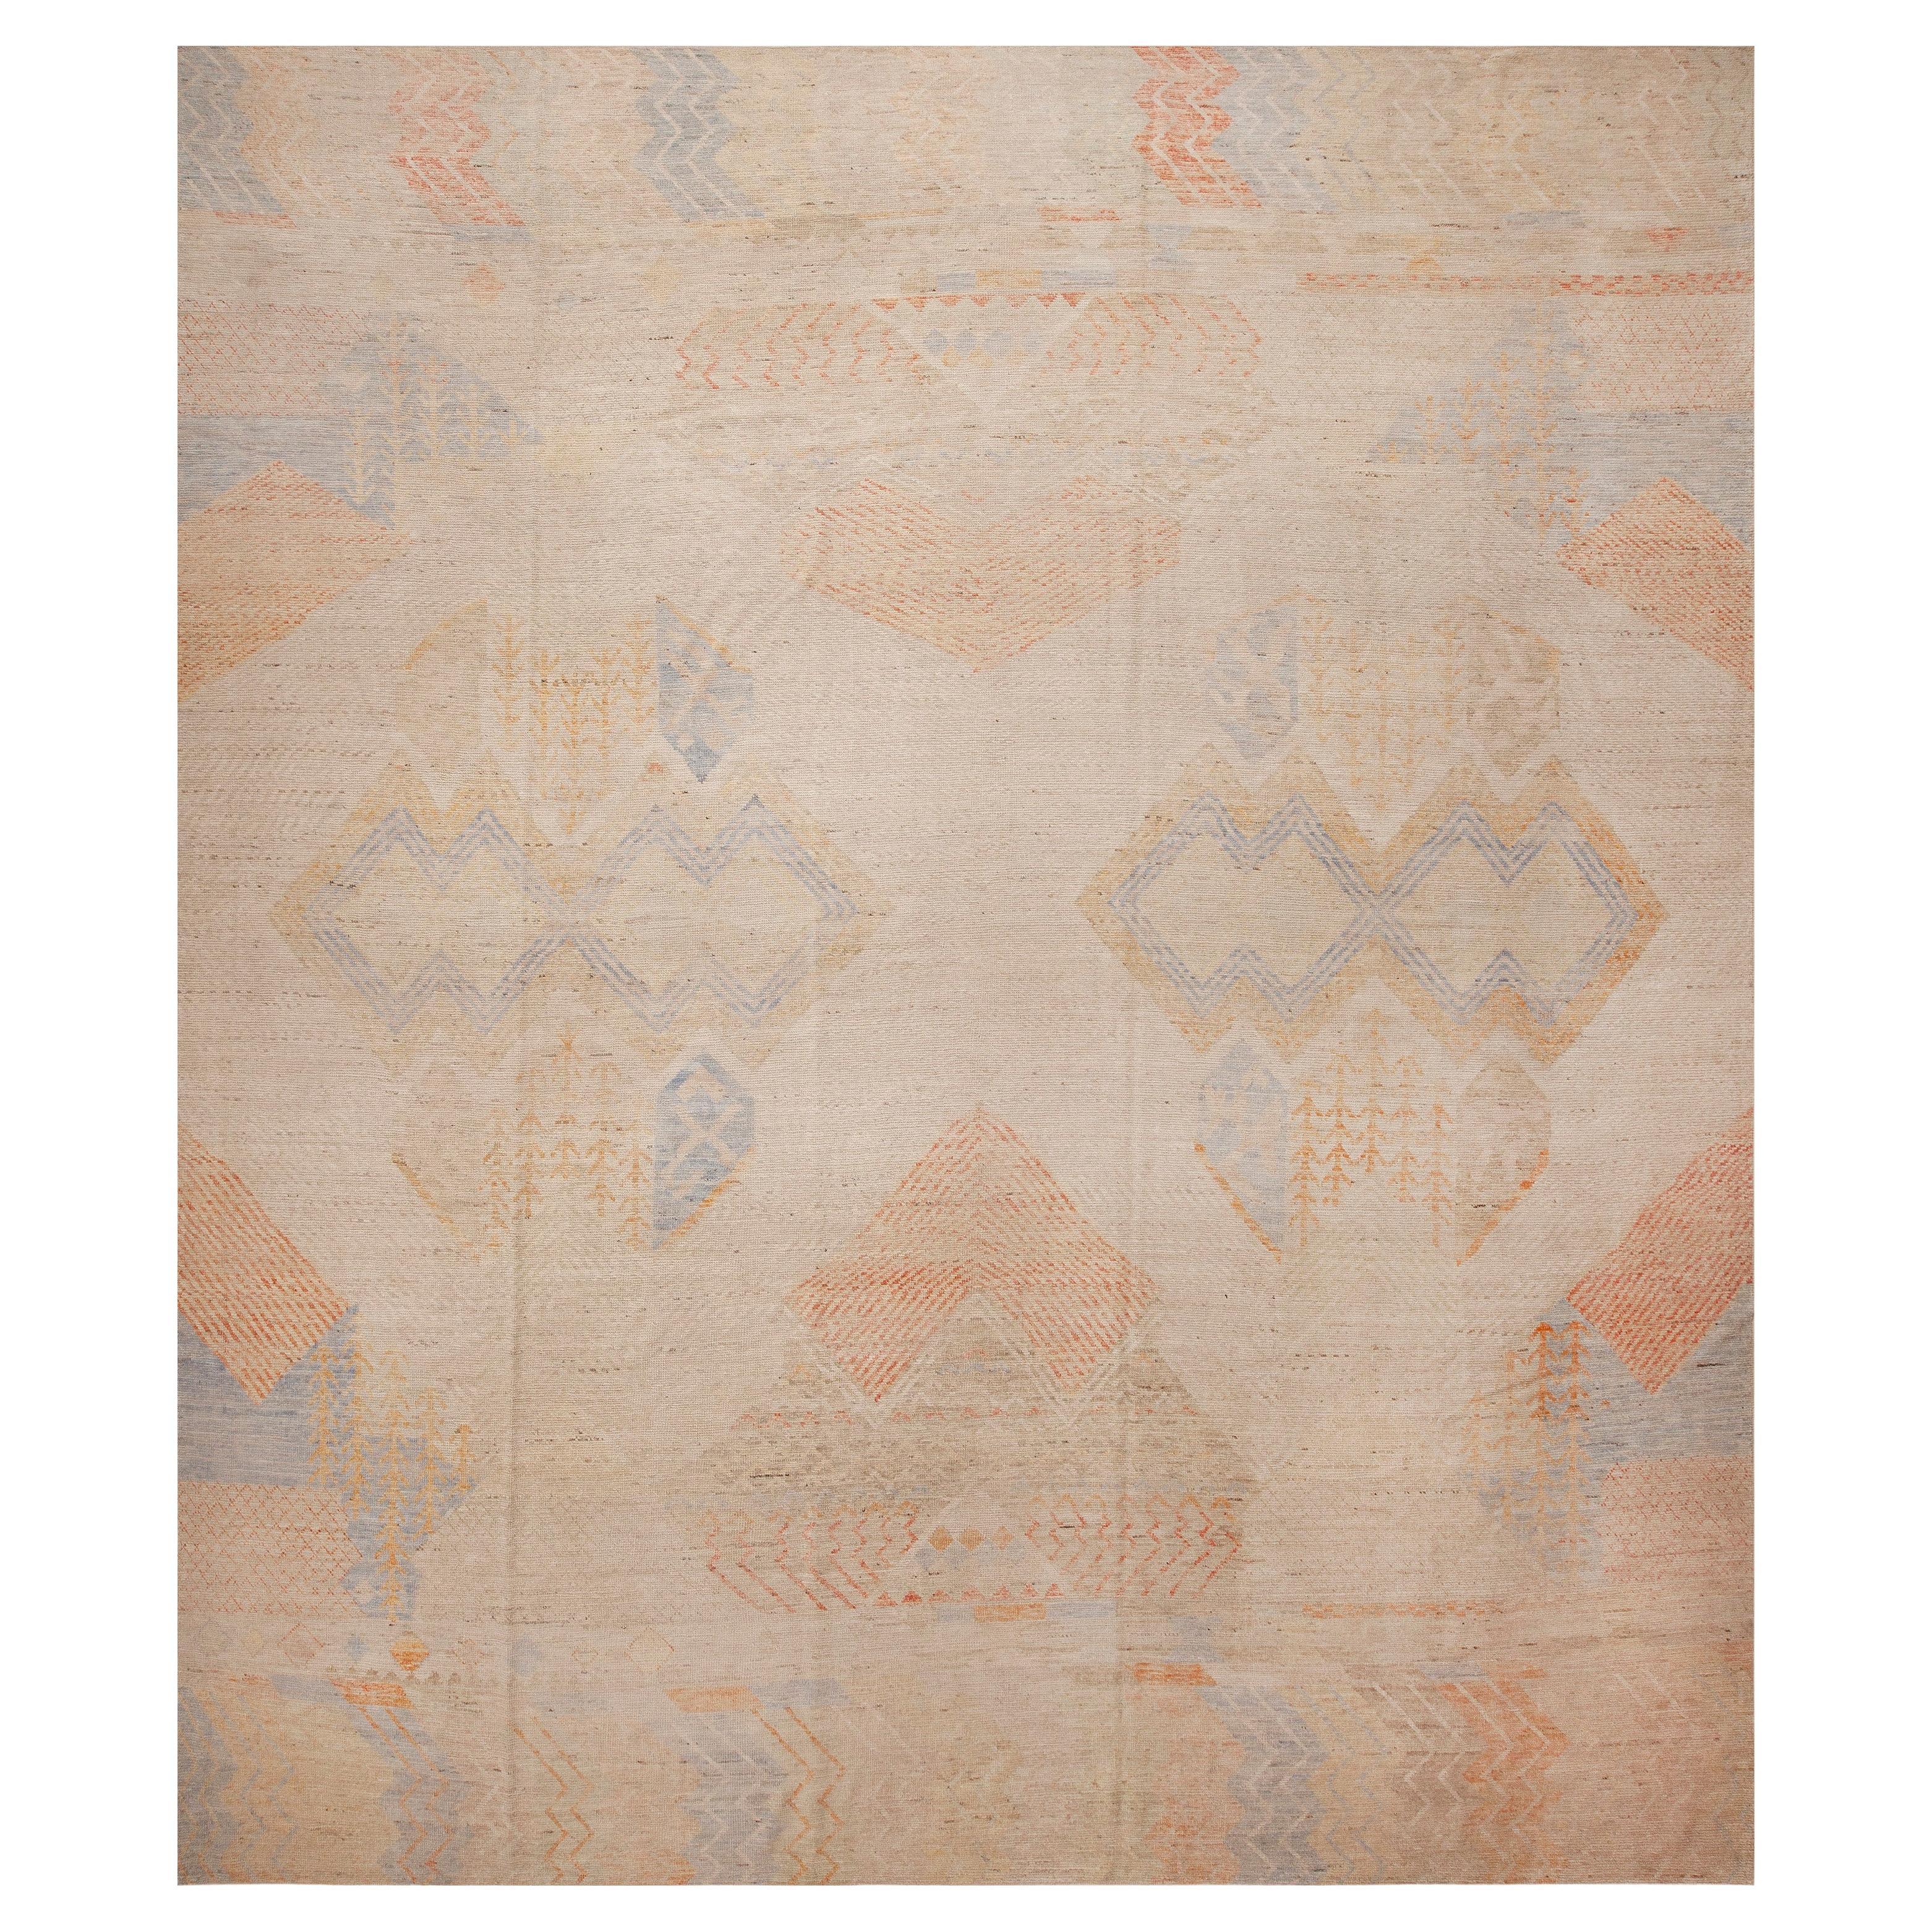 Nazmiyal Collection Rustic Tribal Geometric Design Modern Area Rug 14' x 16'2"